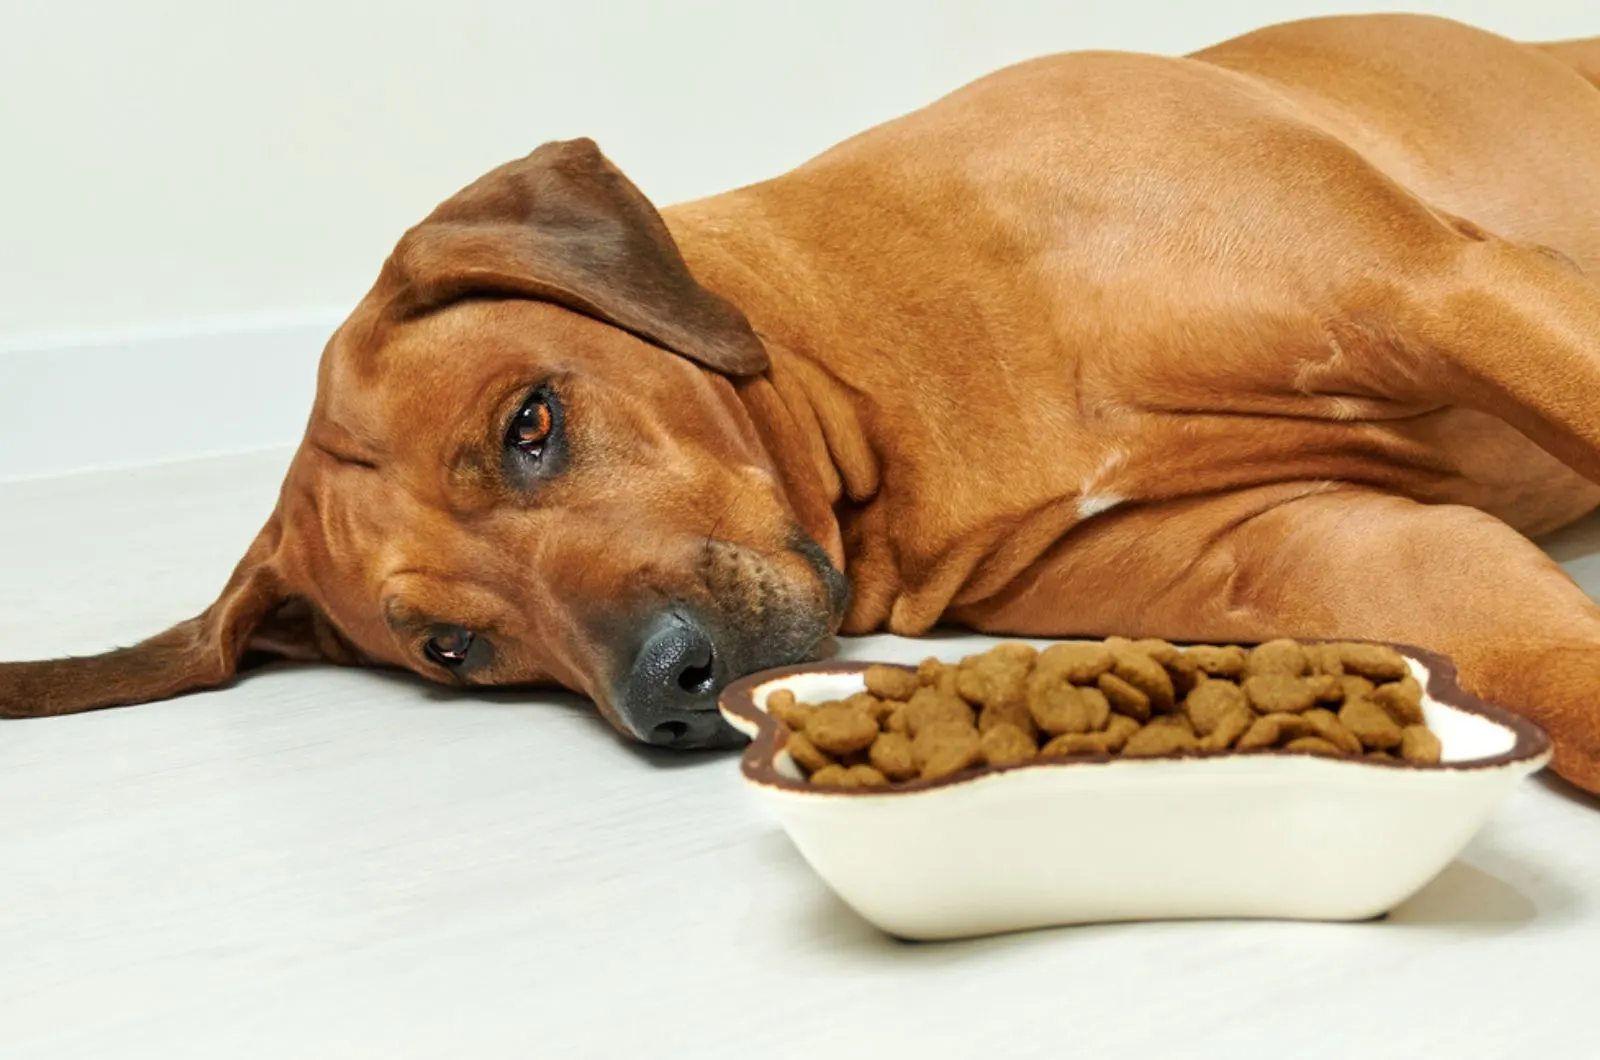 sad rhodesian ridgeback dog lying on the floor and refuses to eat